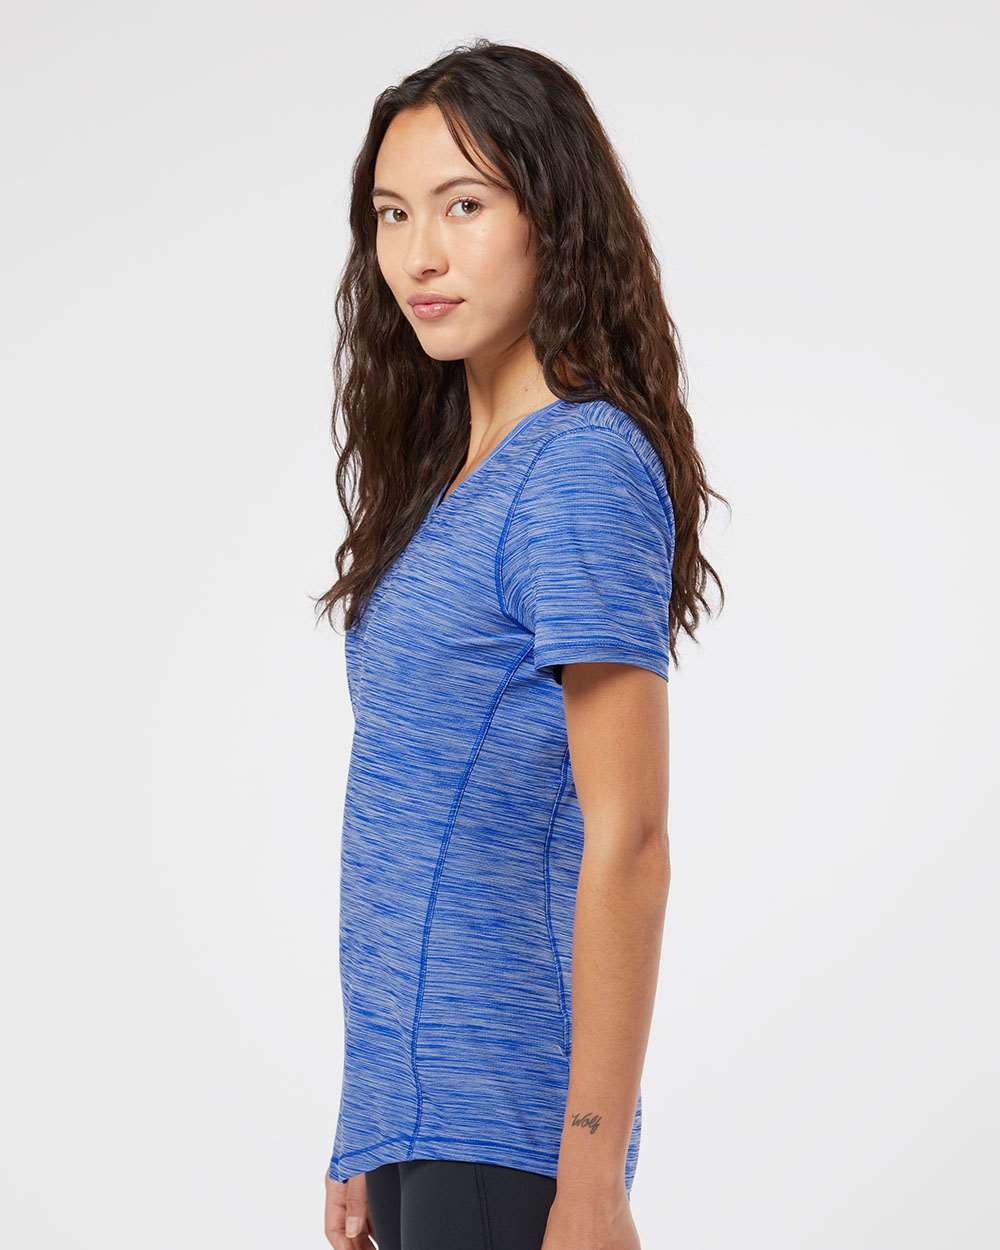 Adidas Women's Mèlange Tech V-Neck T-Shirt #A373 Collegiate Royal Melange Side